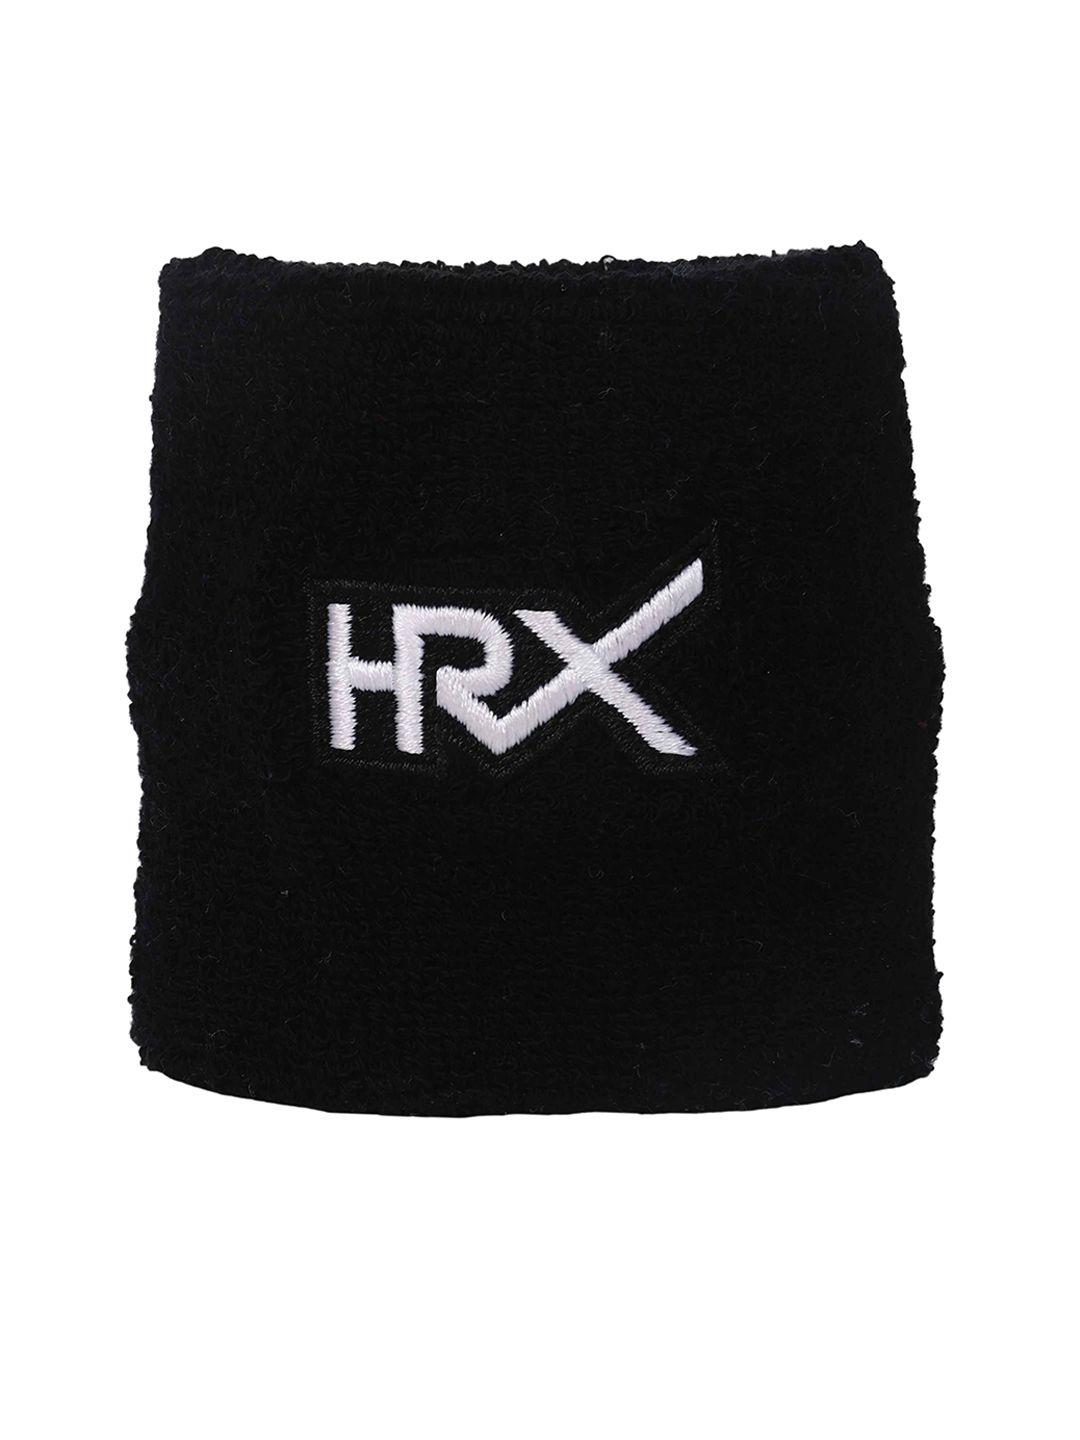 hrx by hrithik roshan pack of 3 brand logo print wristbands